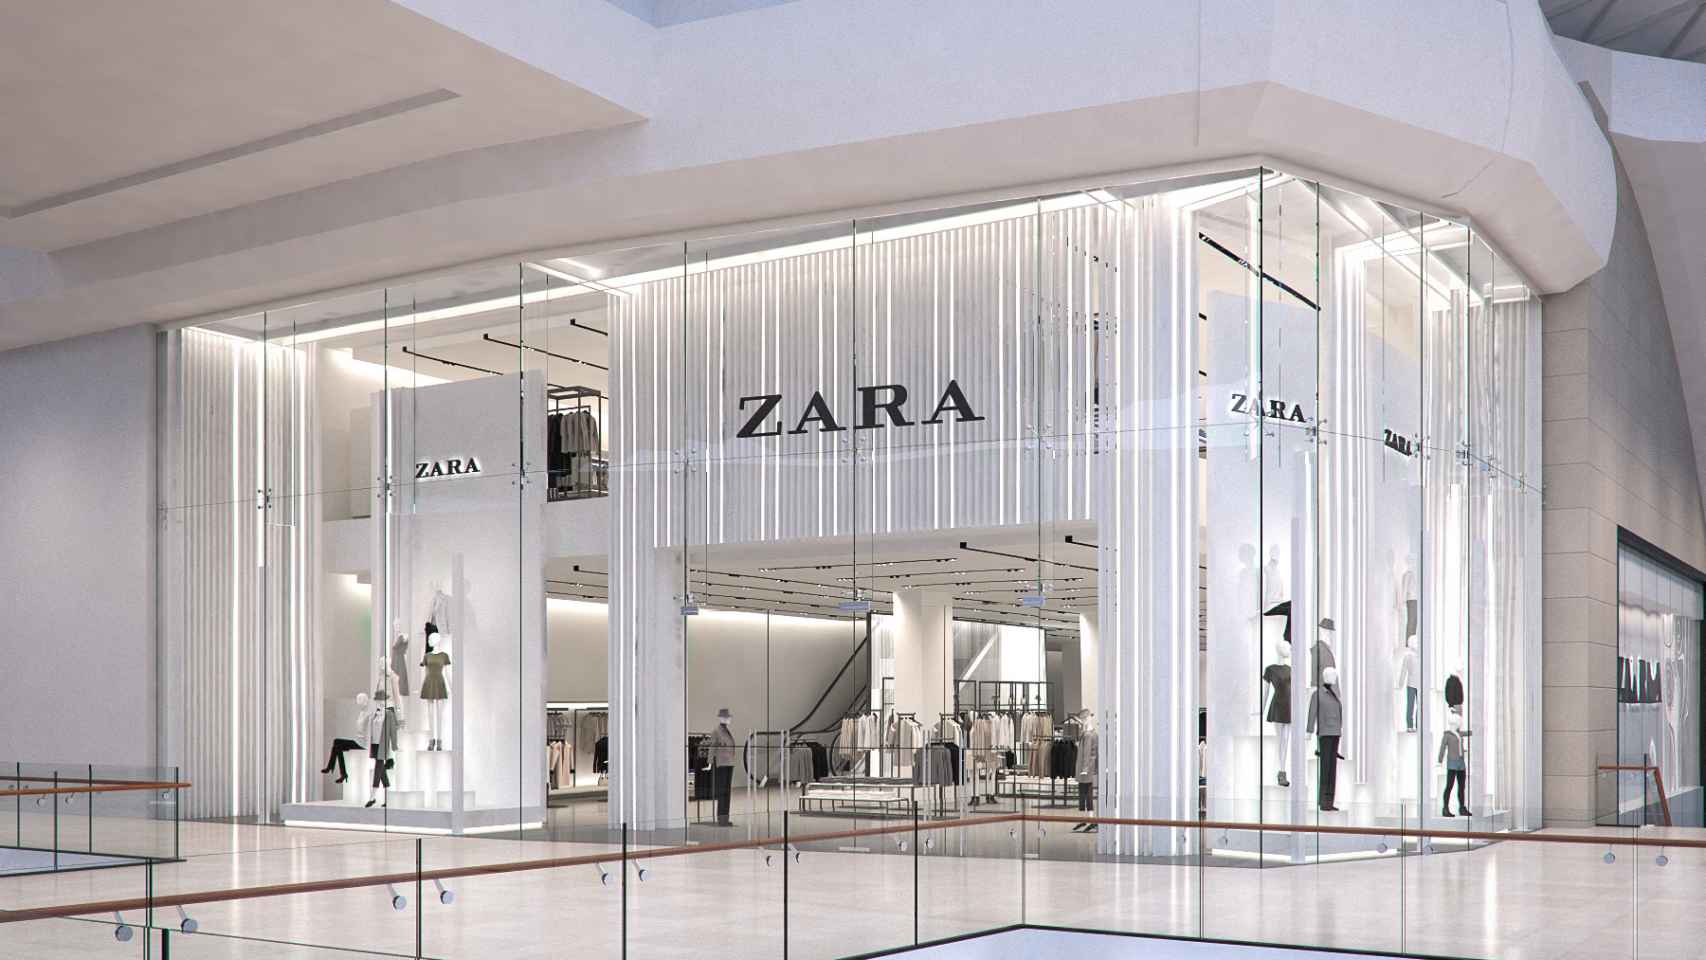 Nuevo Catálogo Zara 2020  Zara moda, Moda, Moda para mujer